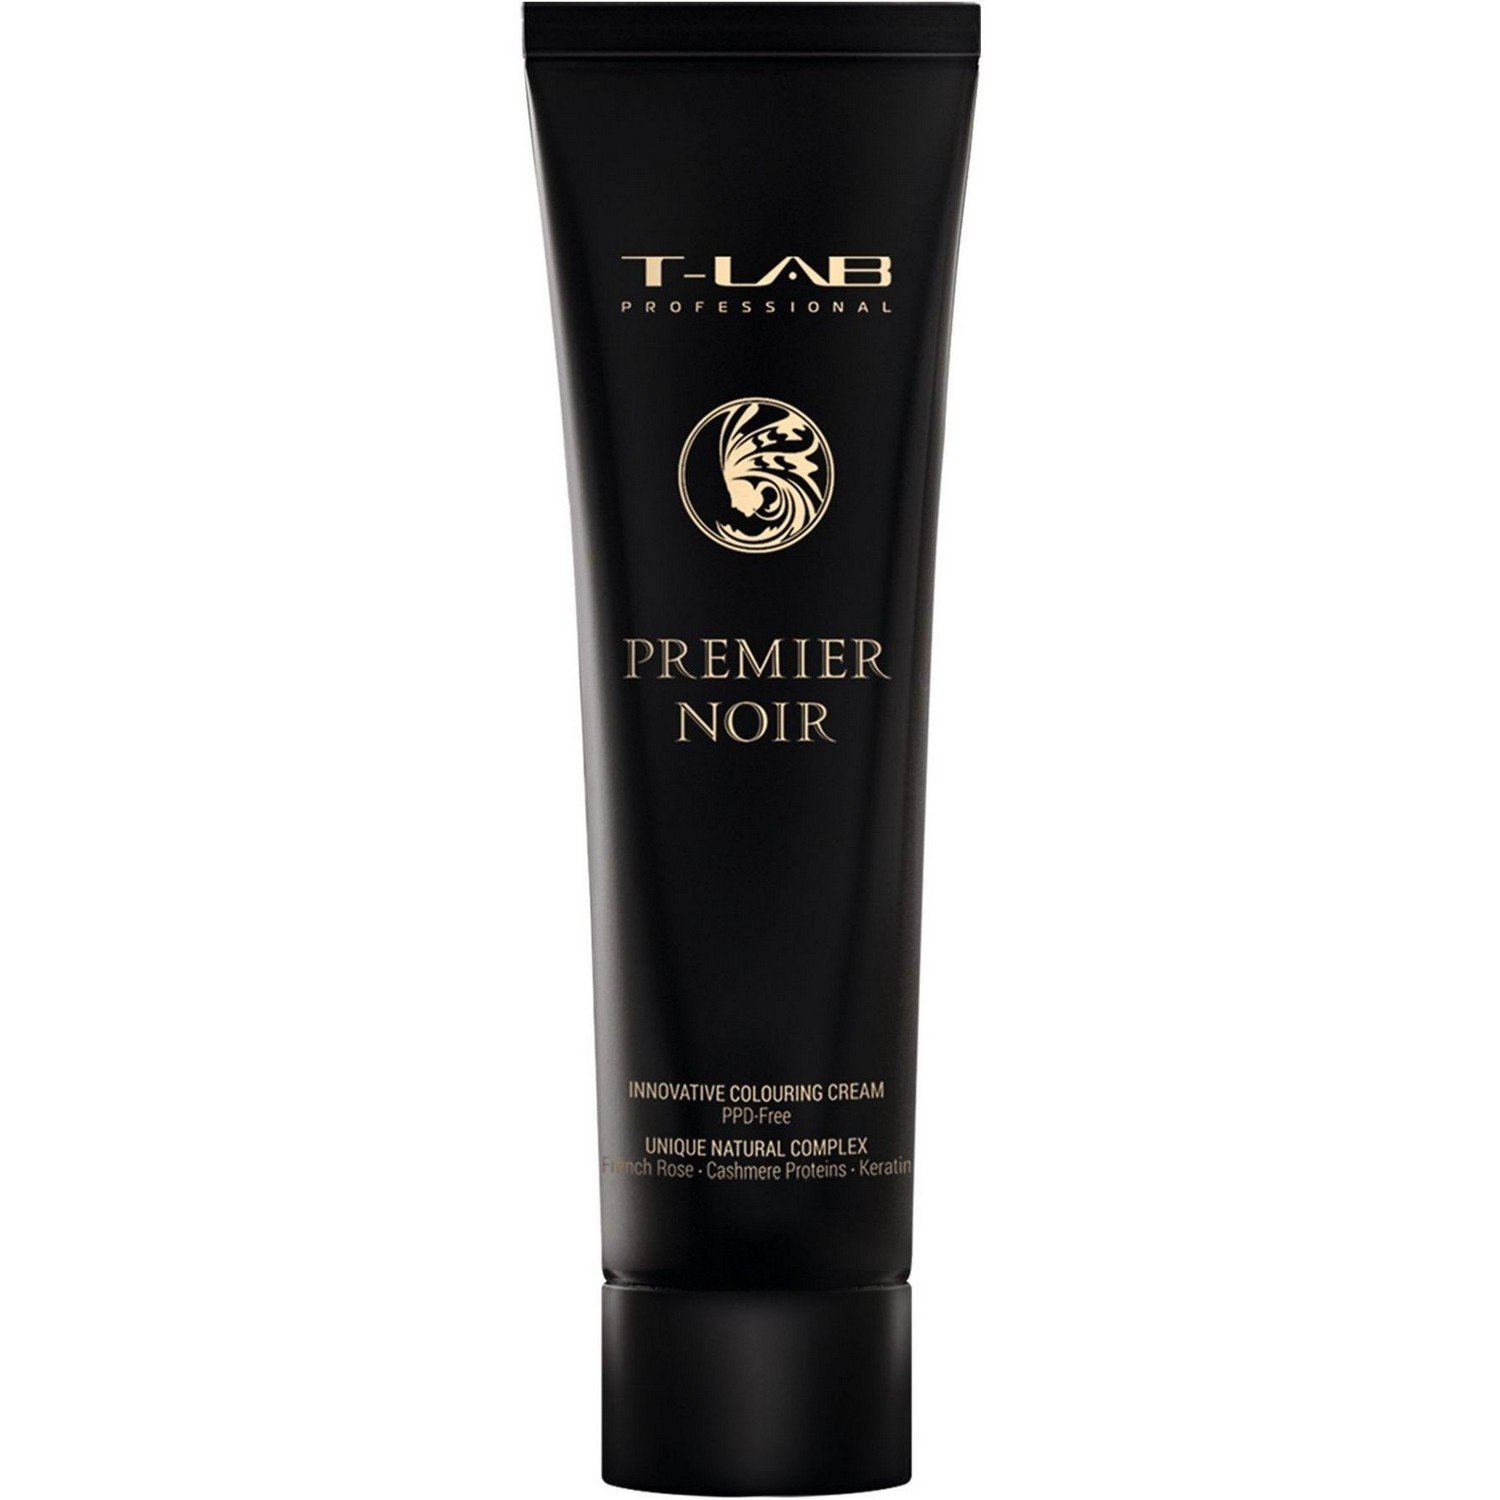 Крем-краска T-LAB Professional Premier Noir colouring cream, оттенок 5.4 (light copper brown) - фото 1